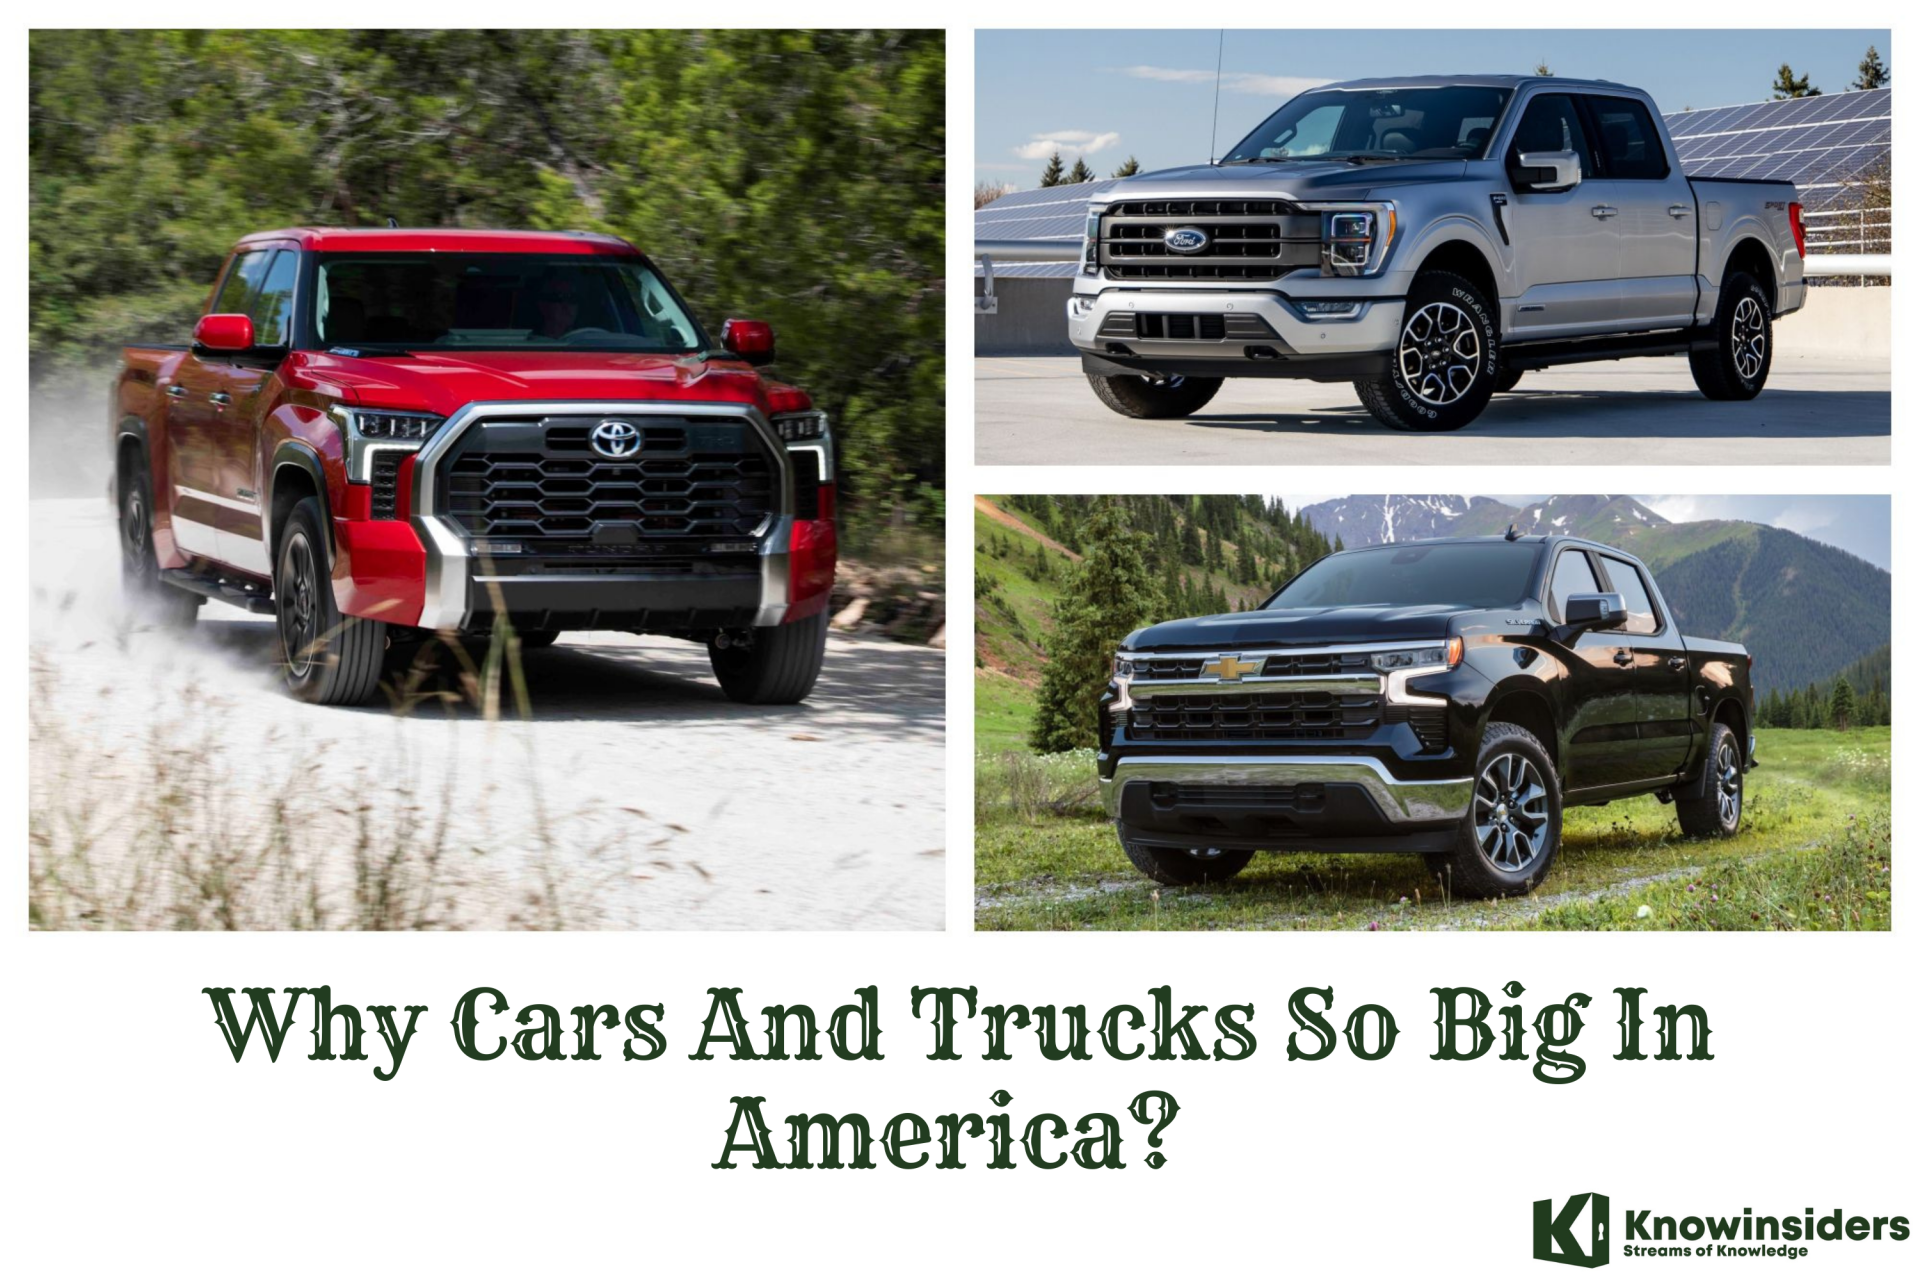 Why Cars And Trucks So Big In America?